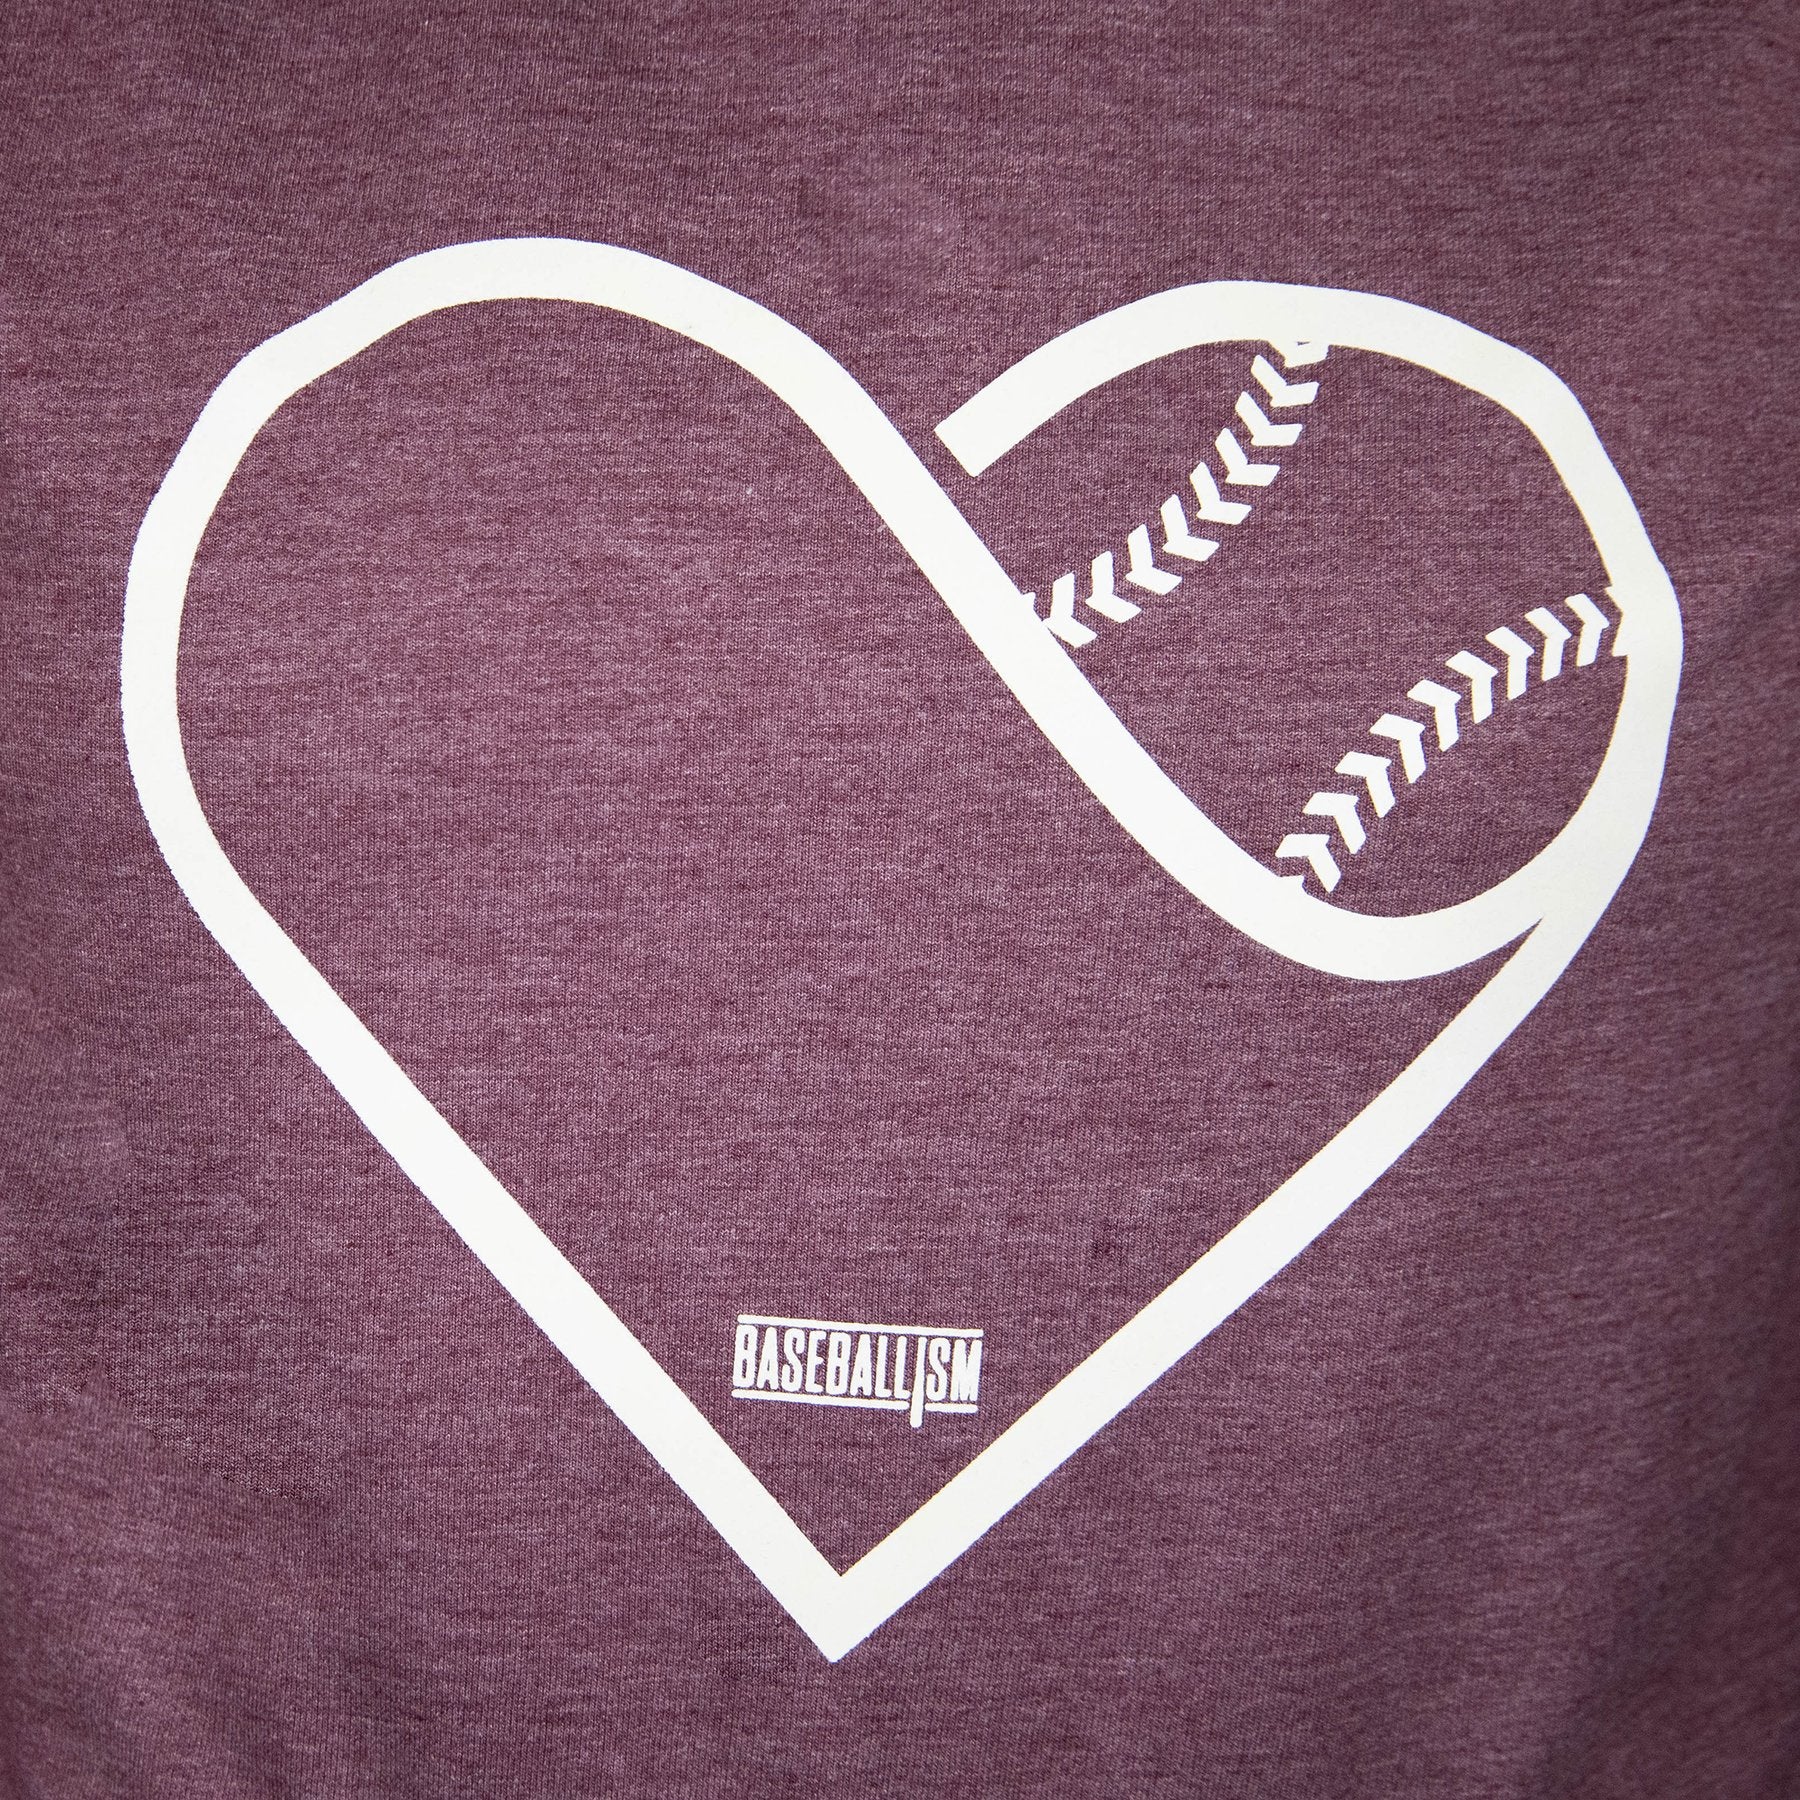 Baseballism - Heart Seams Hoodie (Women's)